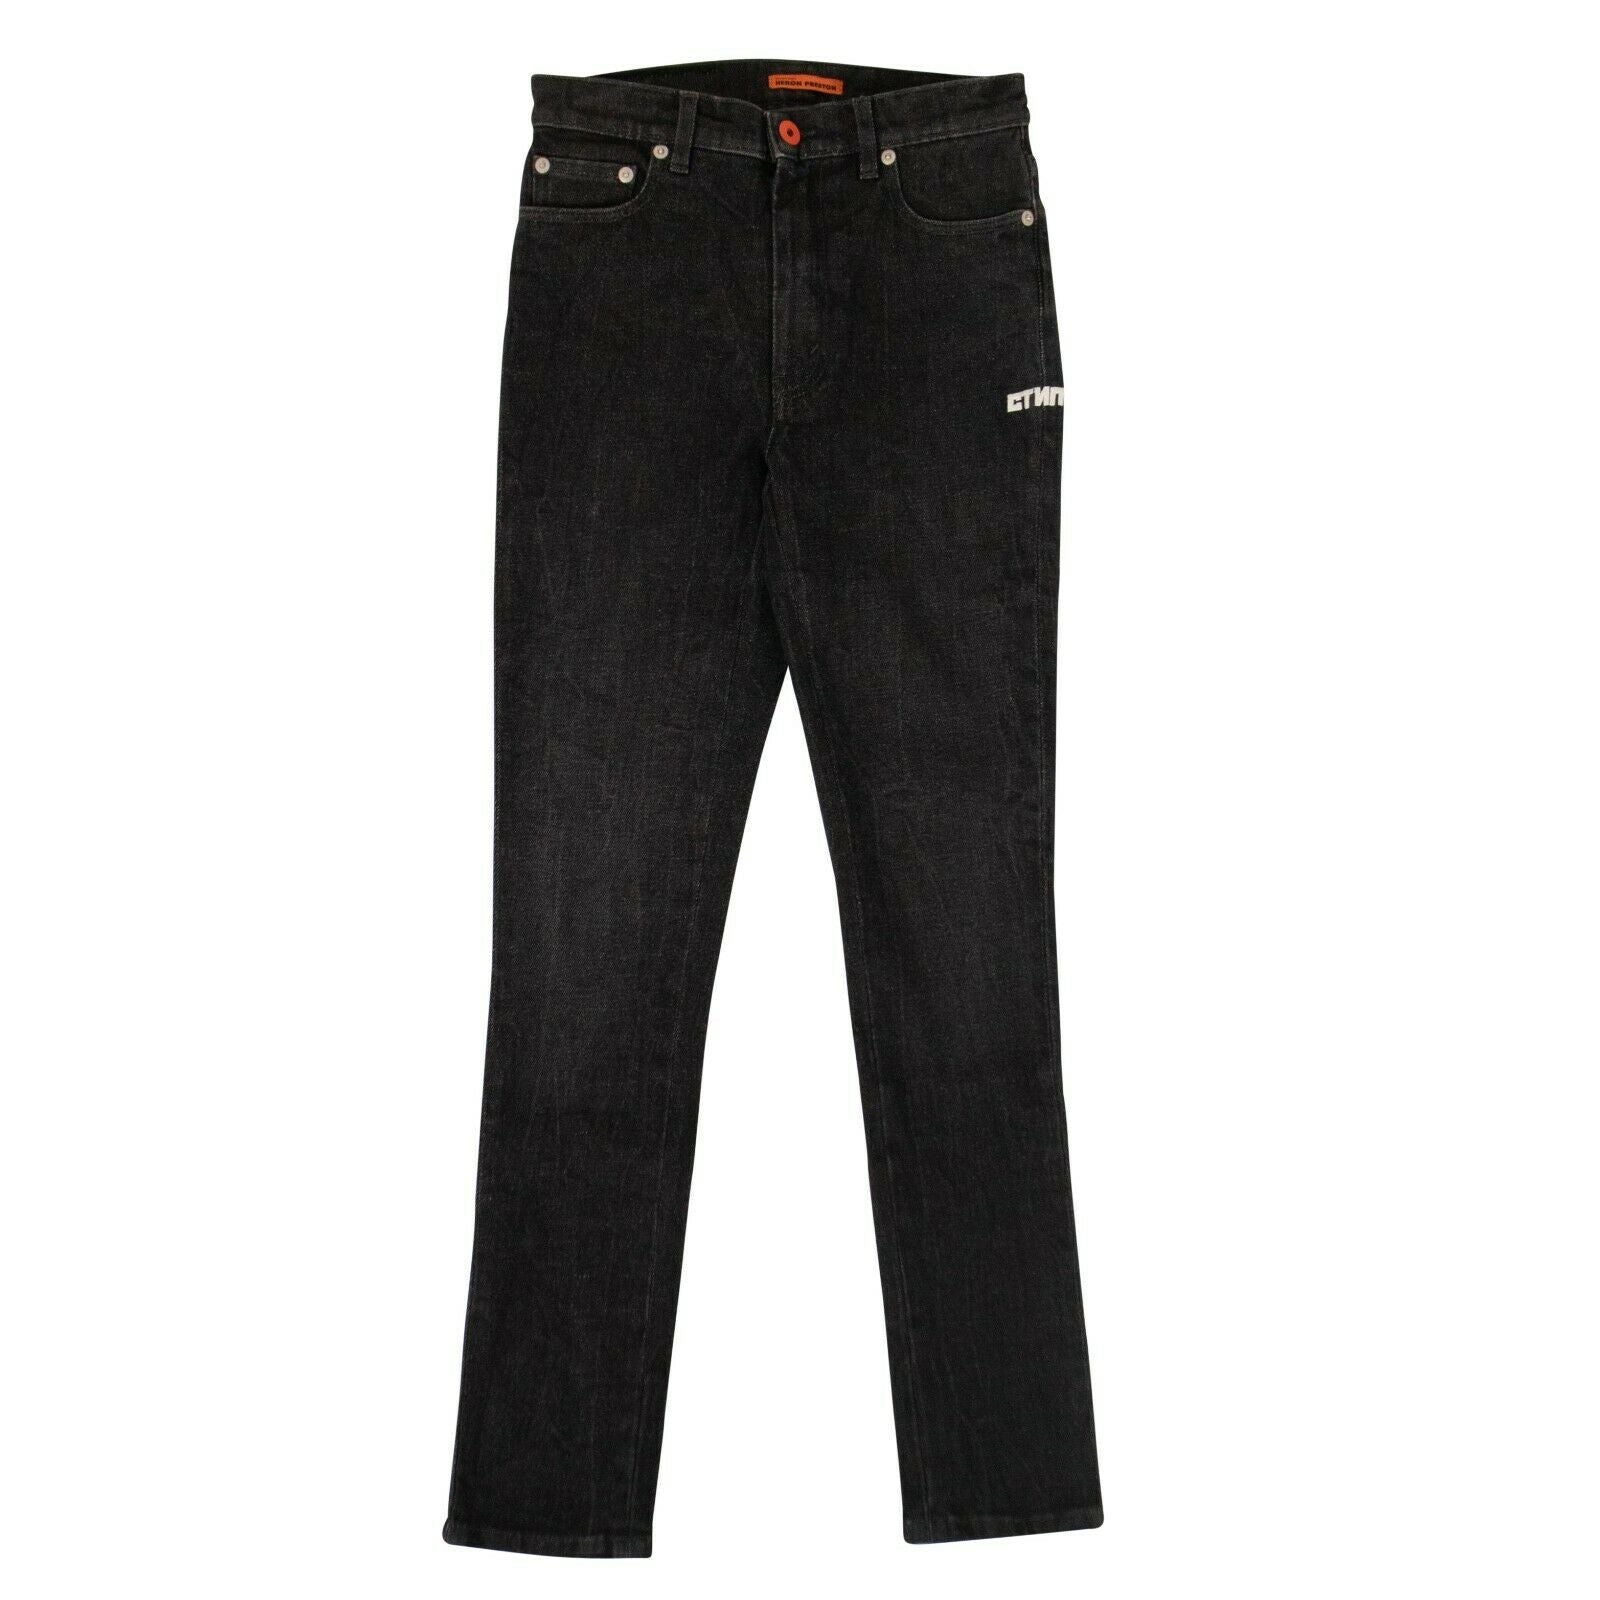 Heron Preston Wash Denim 5 Pocket Jeans - Black